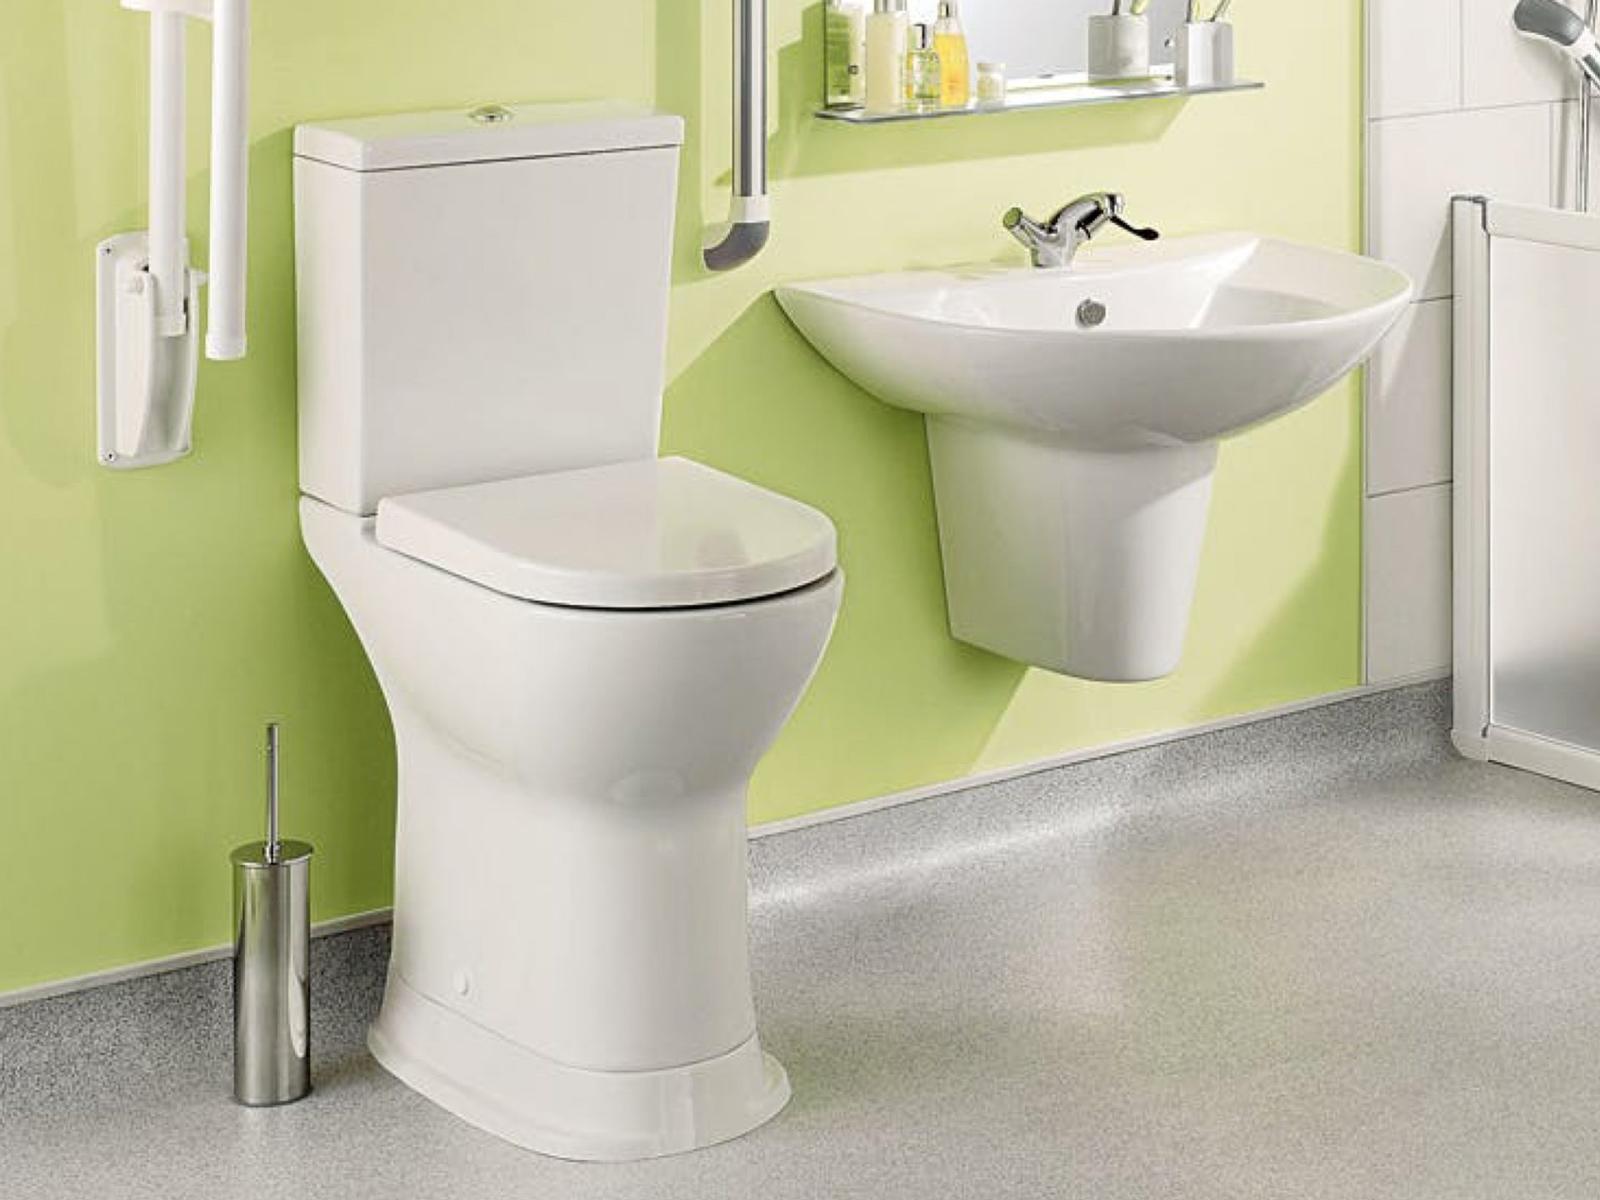 A toilet & sink in a green bathroom